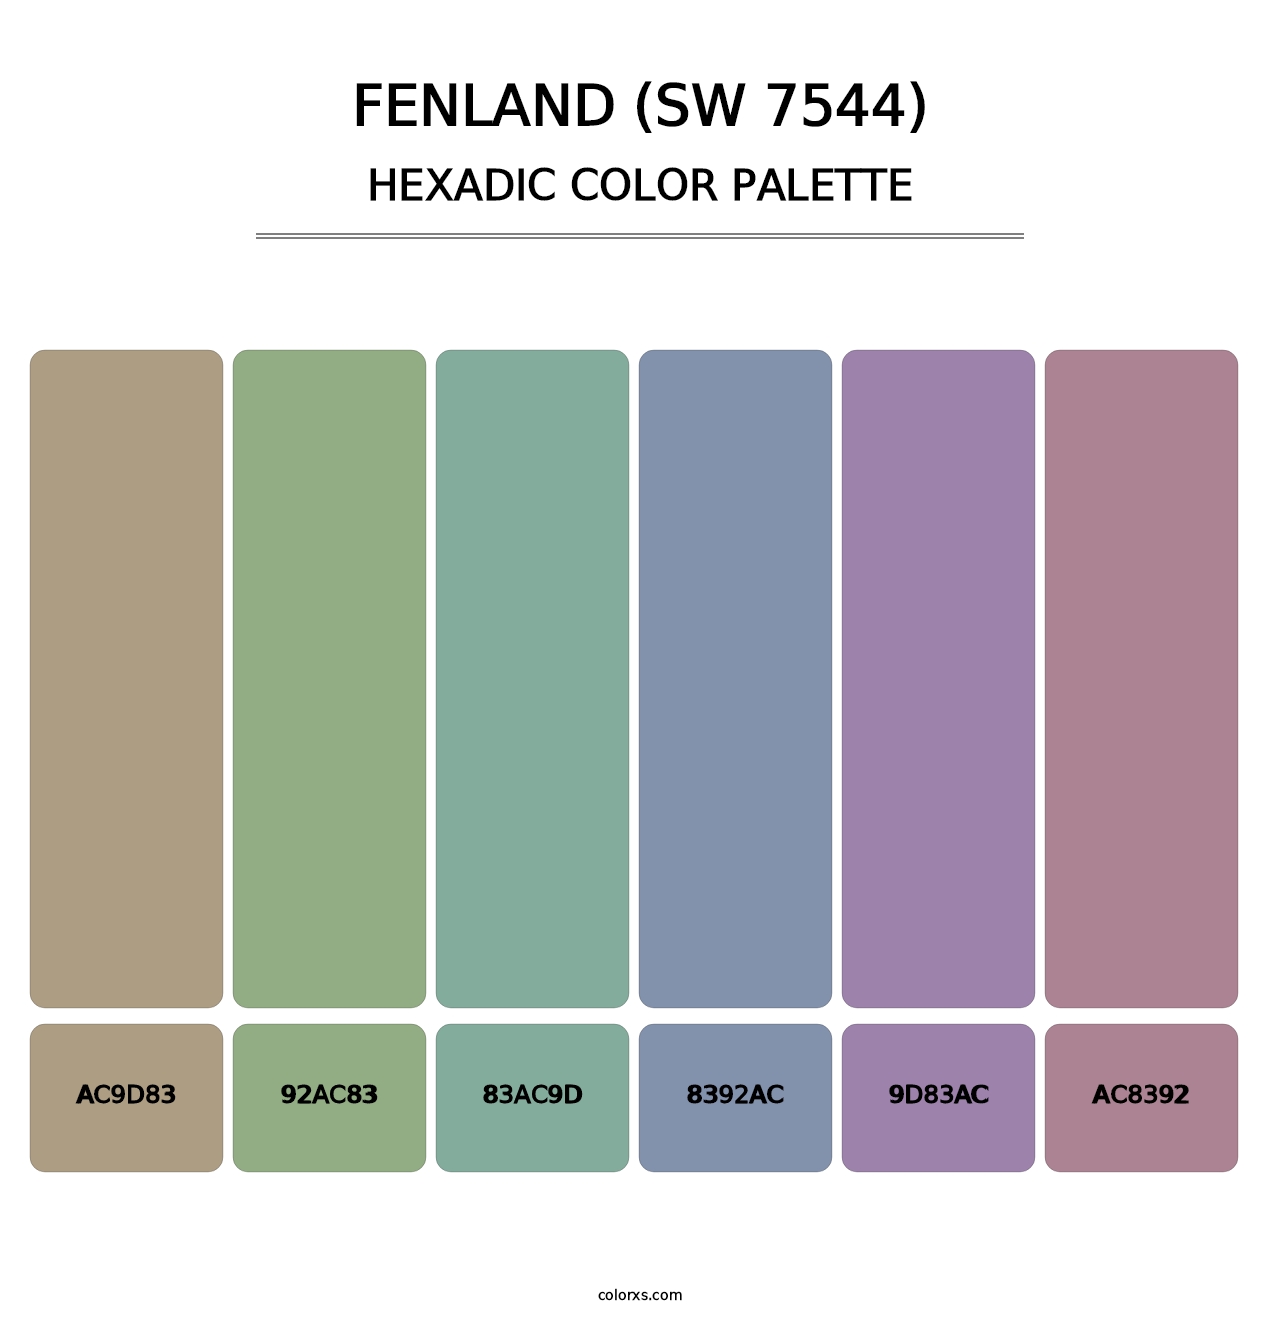 Fenland (SW 7544) - Hexadic Color Palette